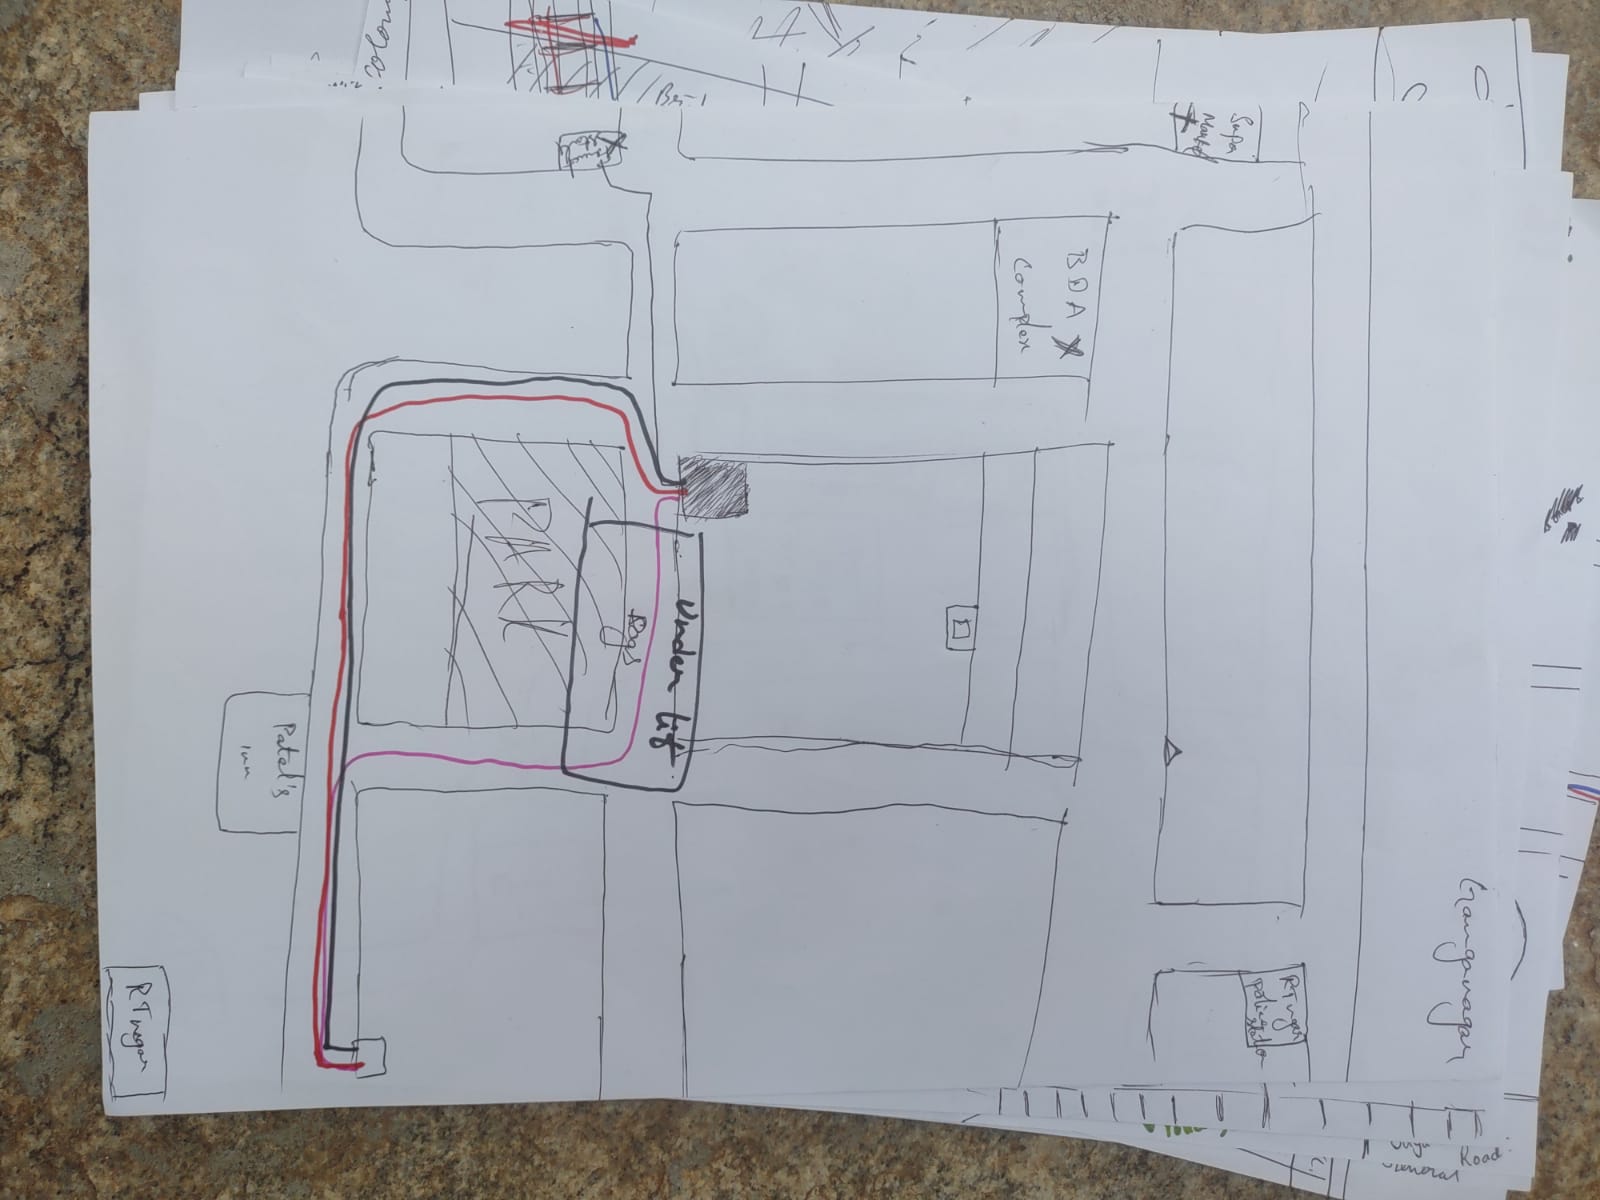 Map that a participant drew of their neighbourhood